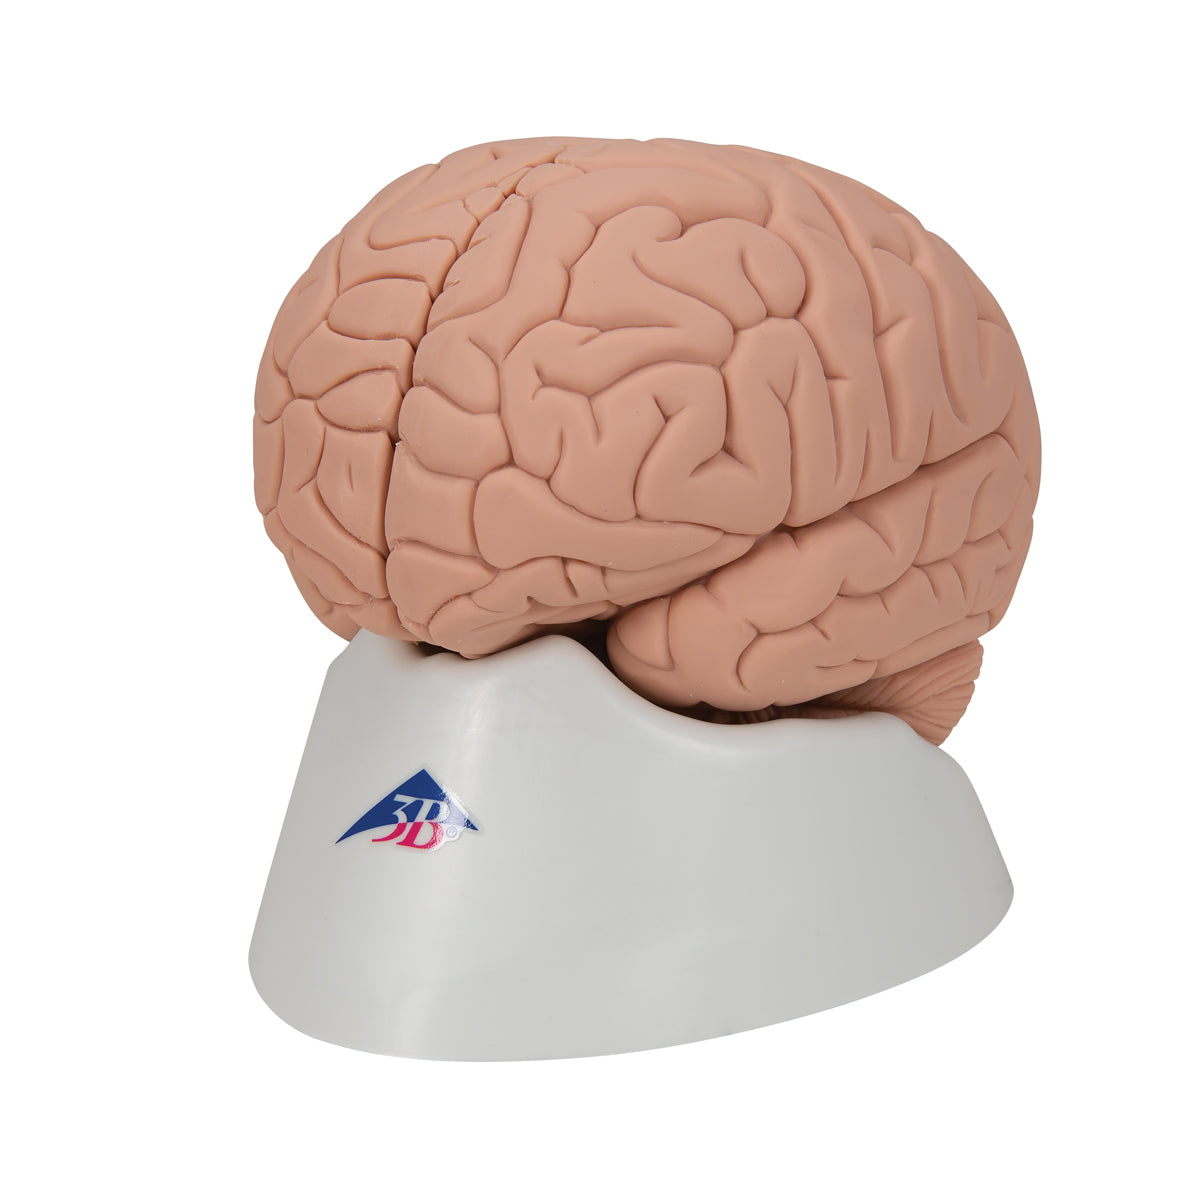 C15/1 Introductory Human Brain Model, 2 part - 3B Smart Anatomy